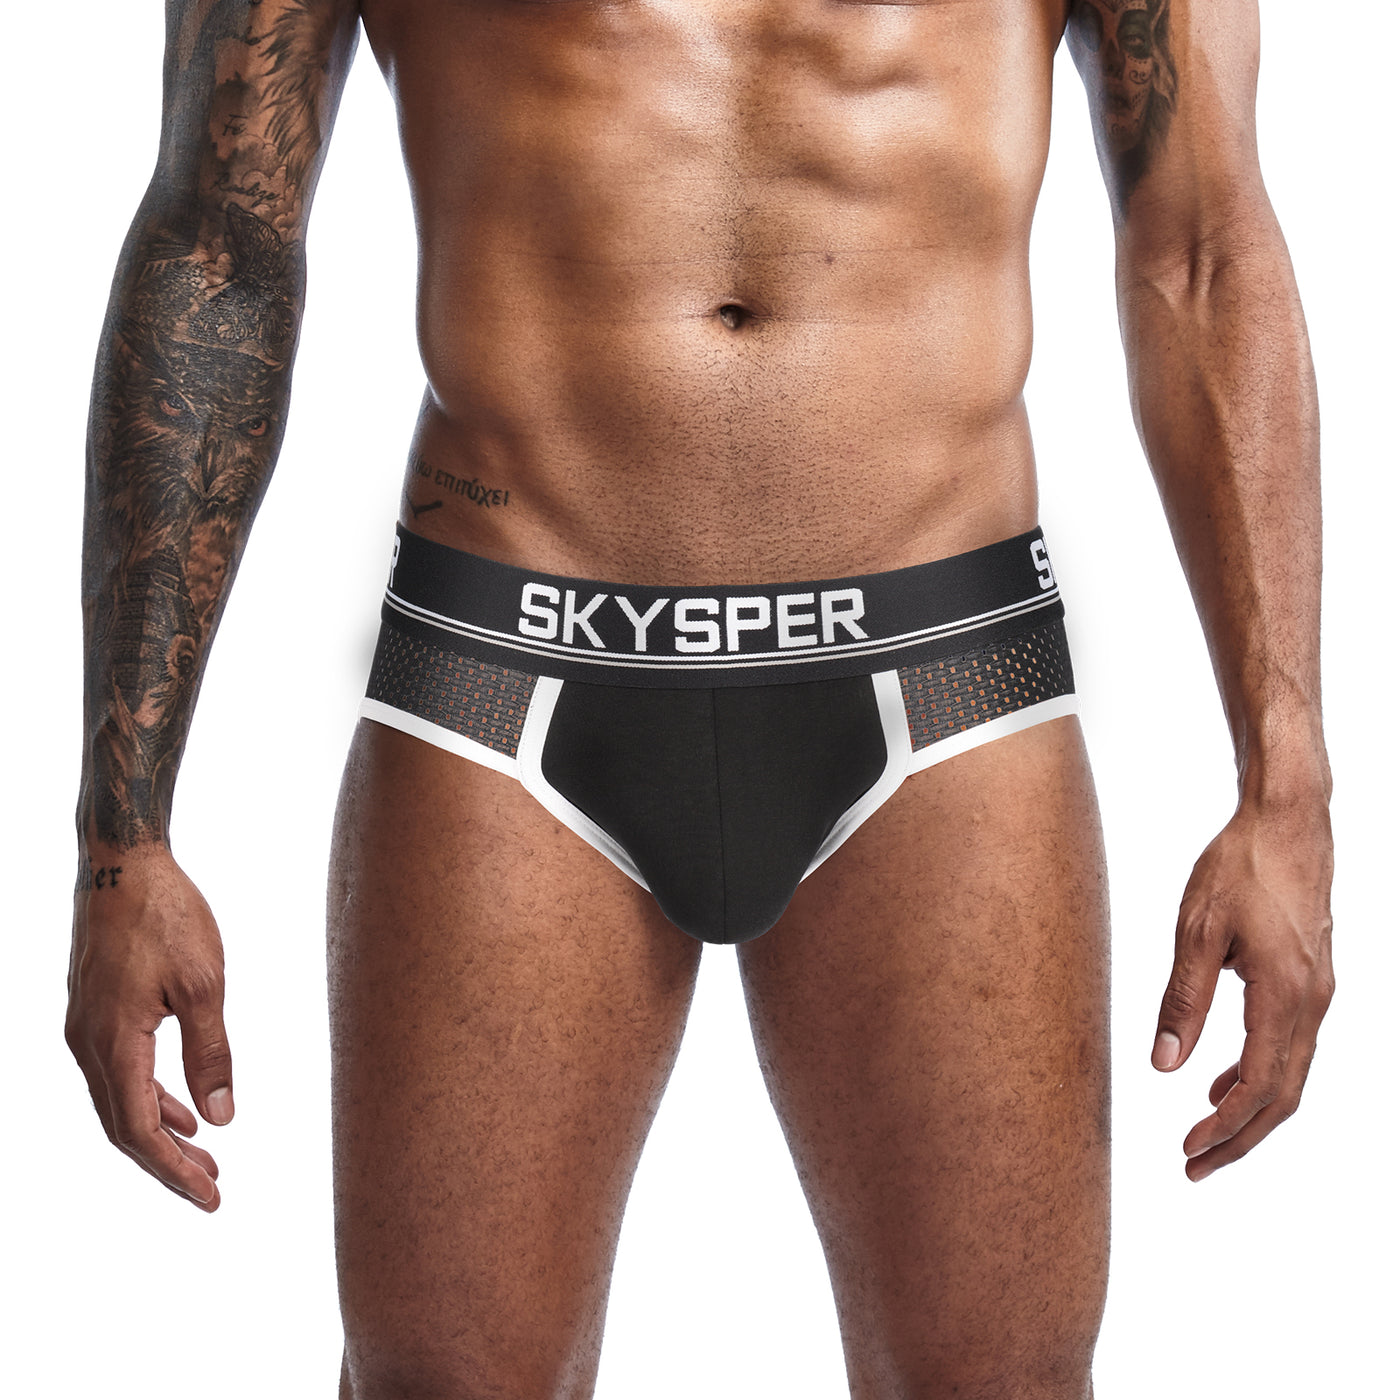 SG18 - SKYSPER Men's Jockstrap Cotton & Mesh Underwear Athletic Supporter